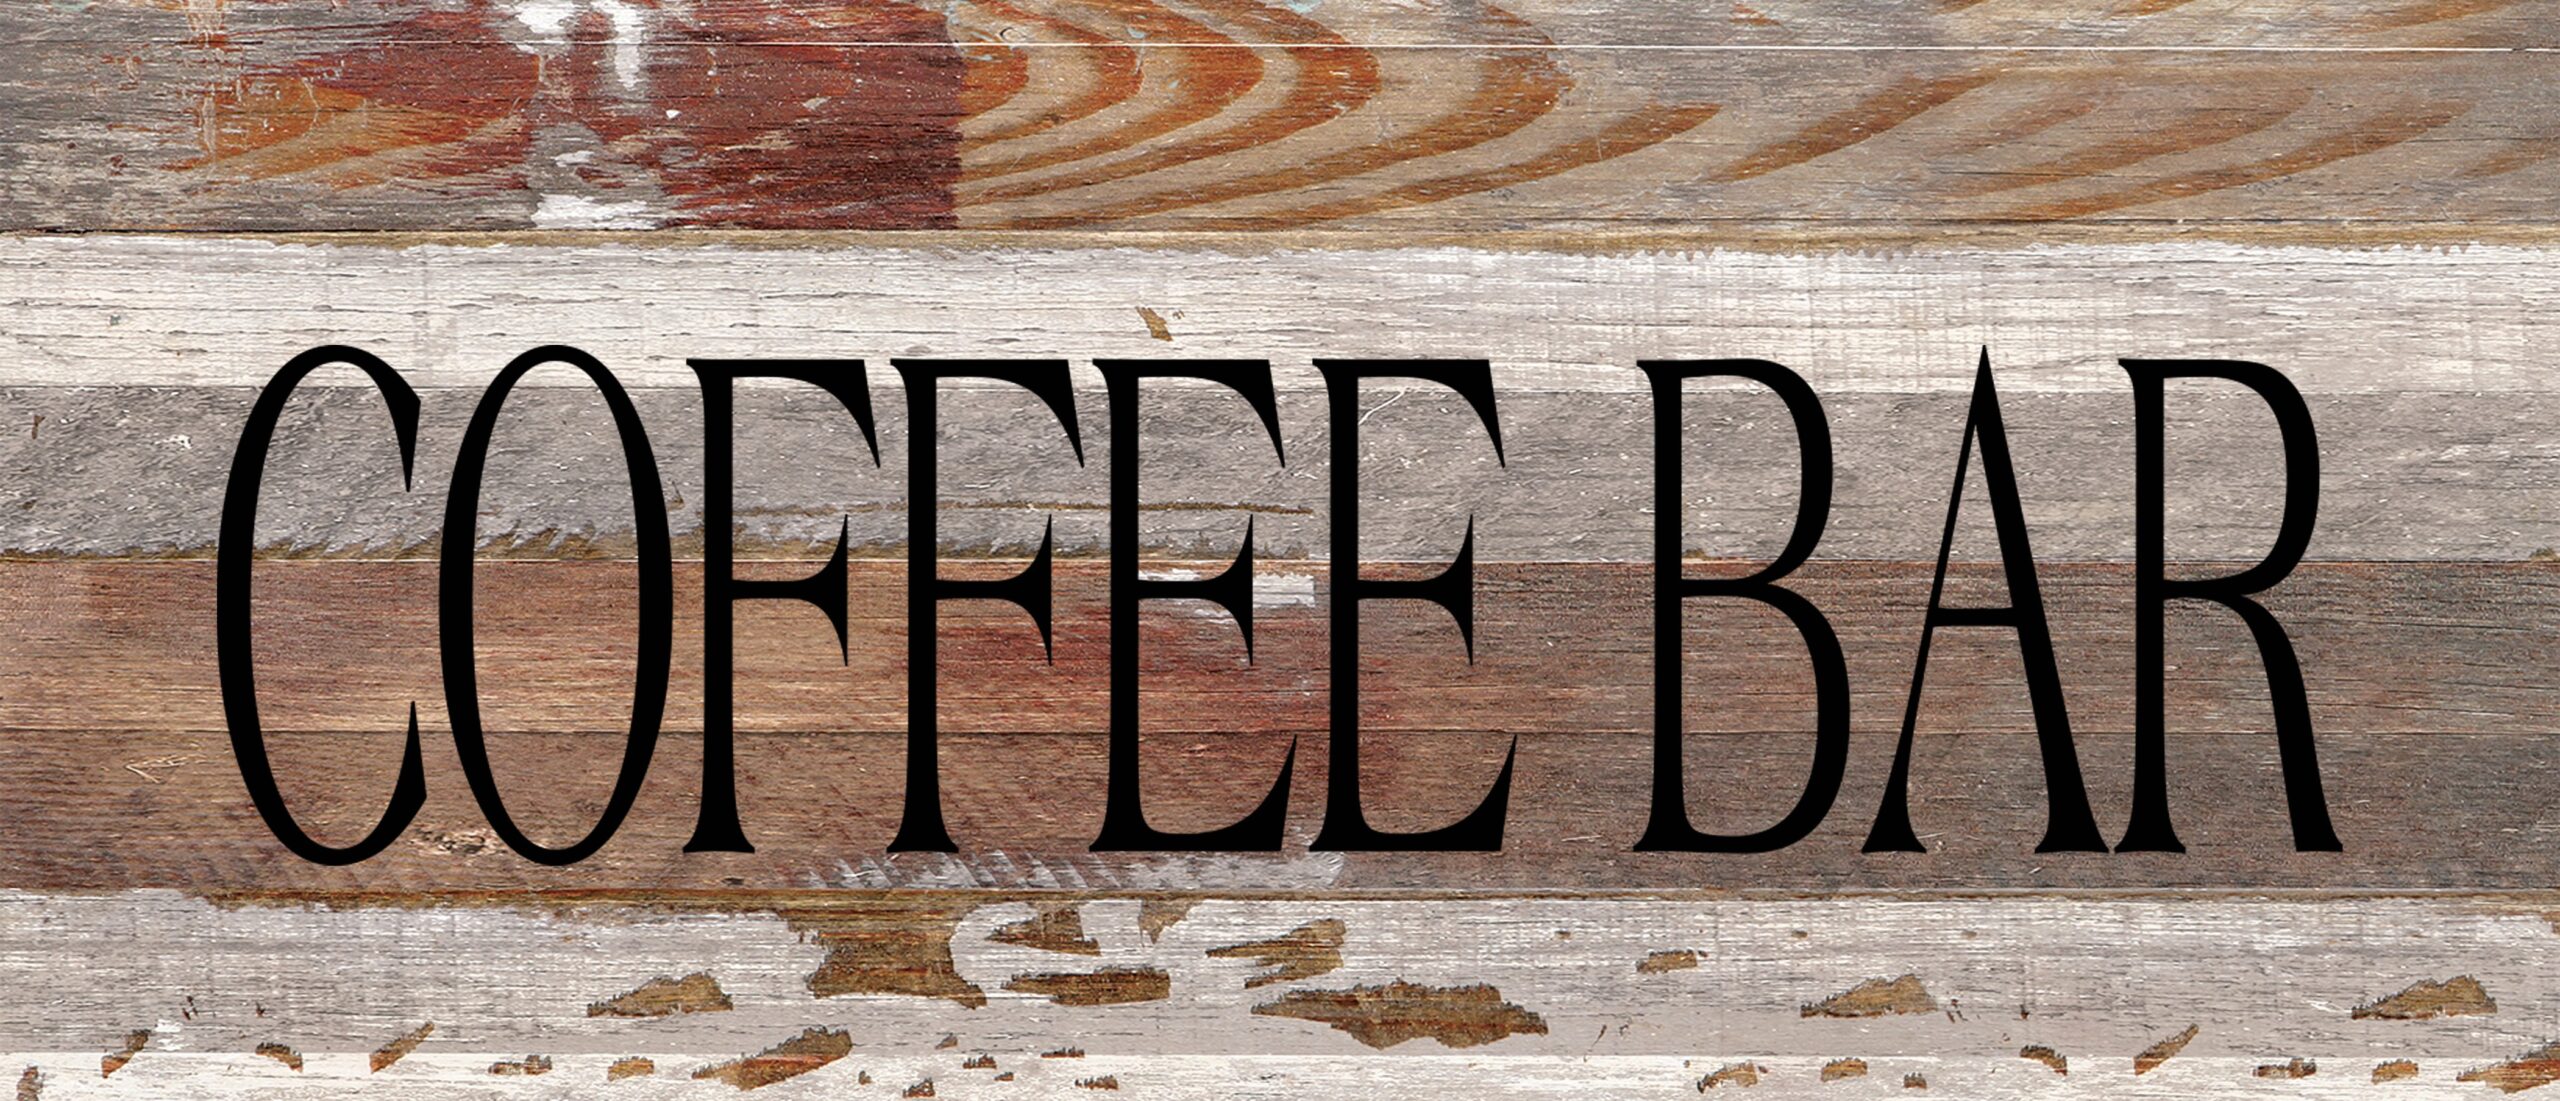 Coffee Bar. / 14"x6" Reclaimed Wood Sign